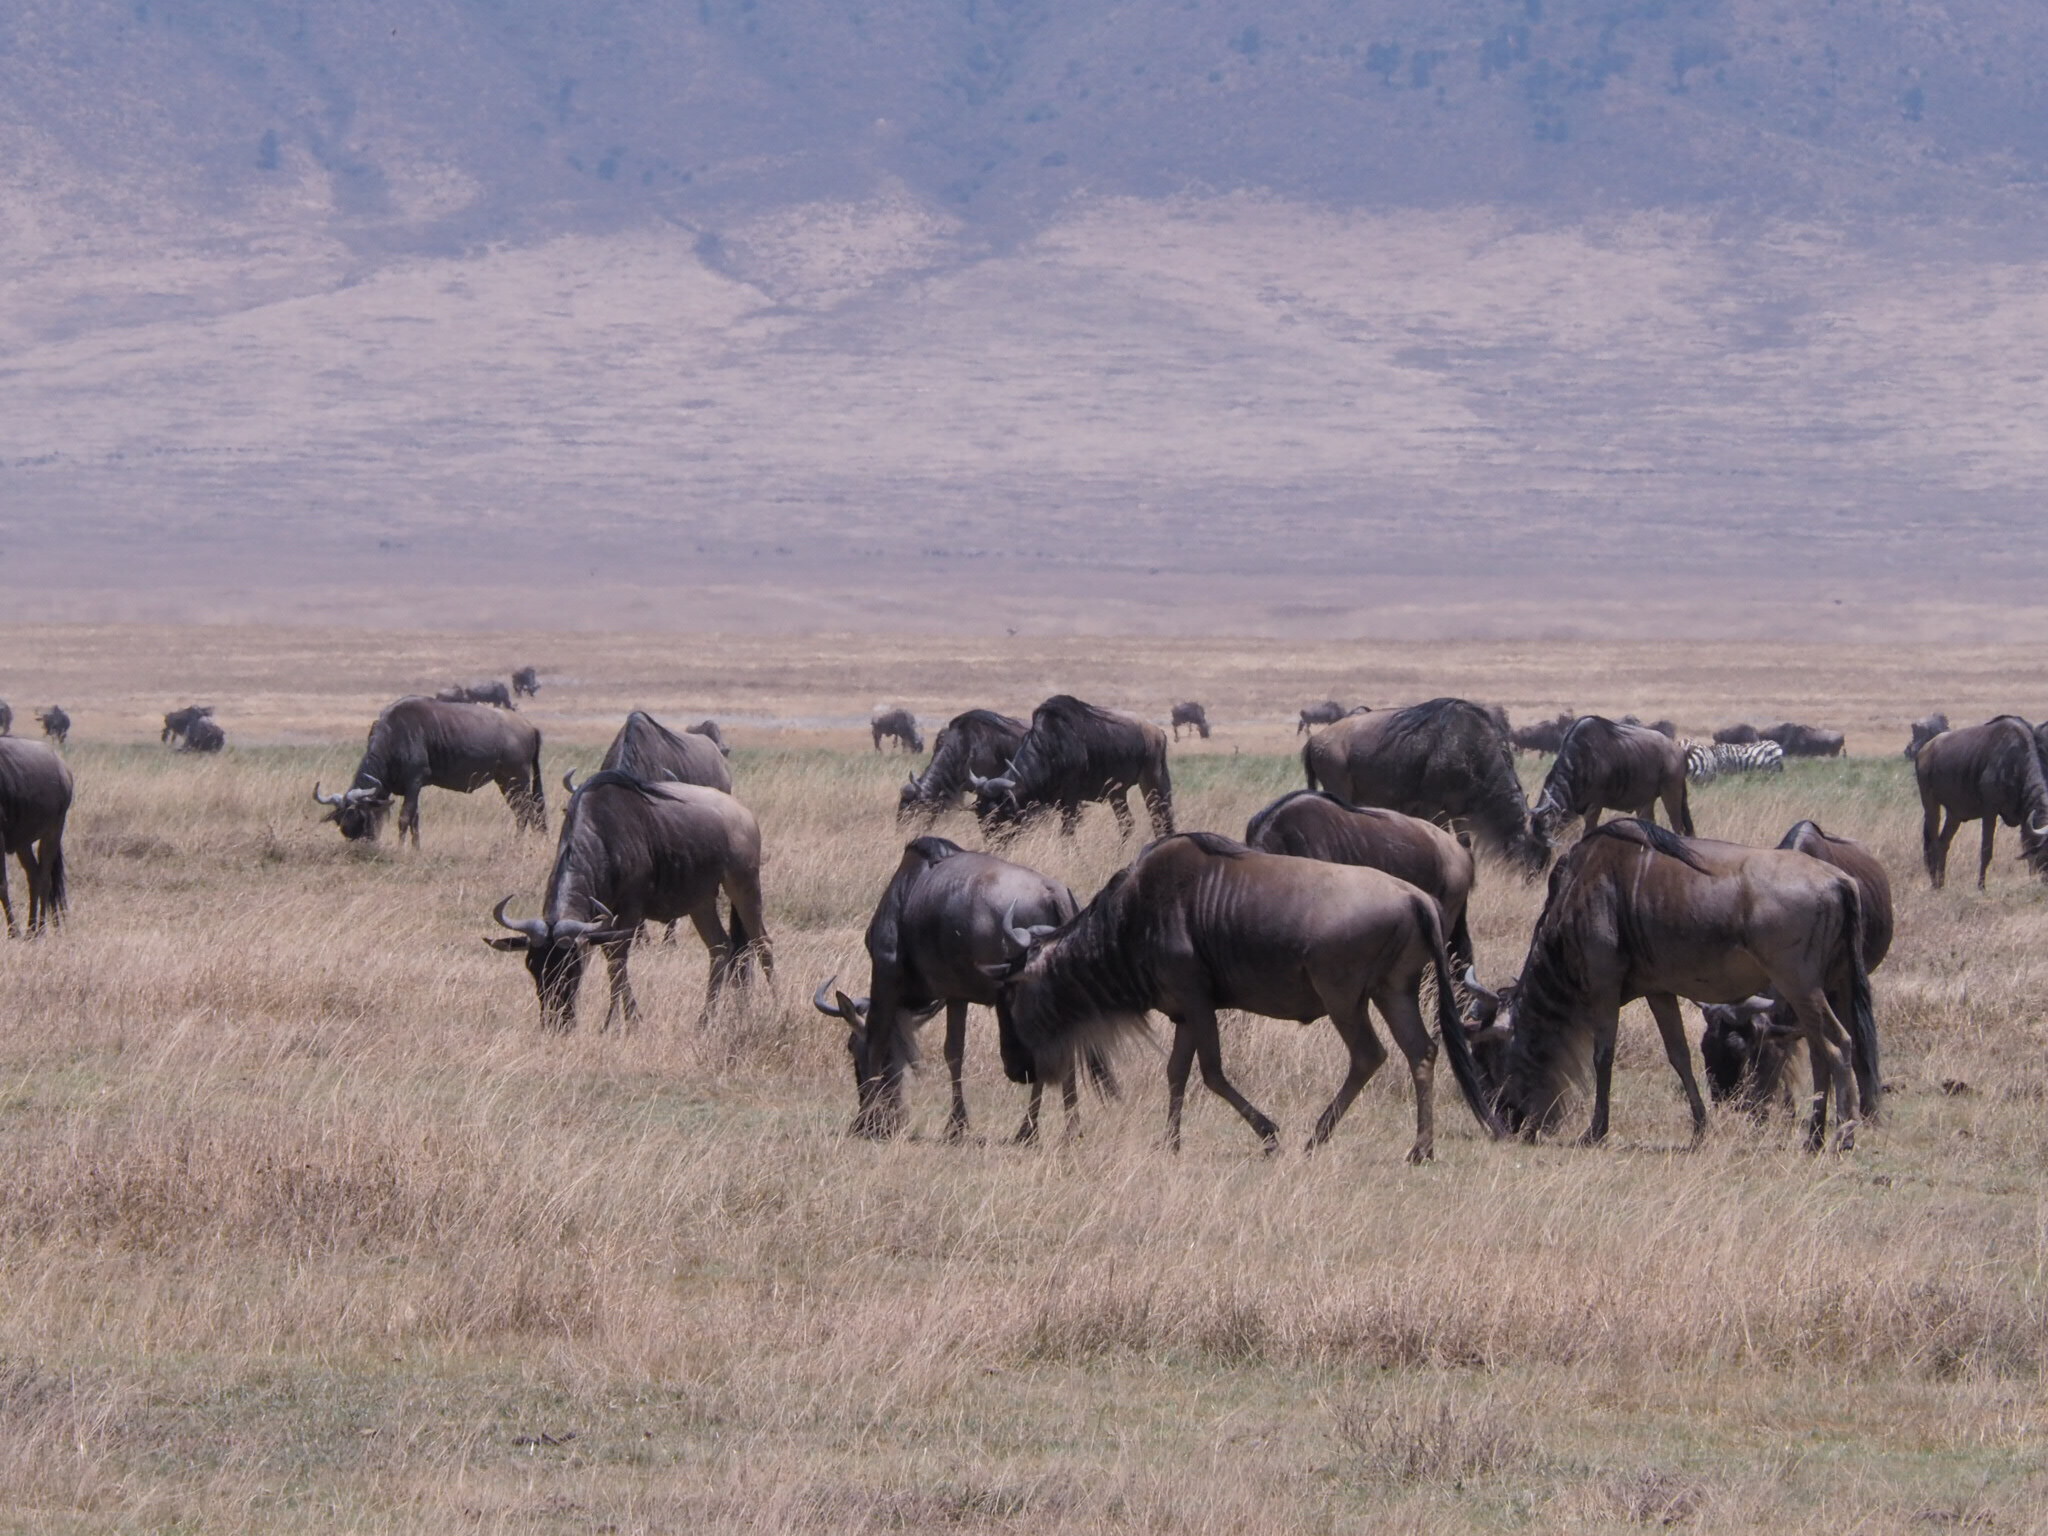 Ngorongoro有絕大部分東非可找到的大型動物